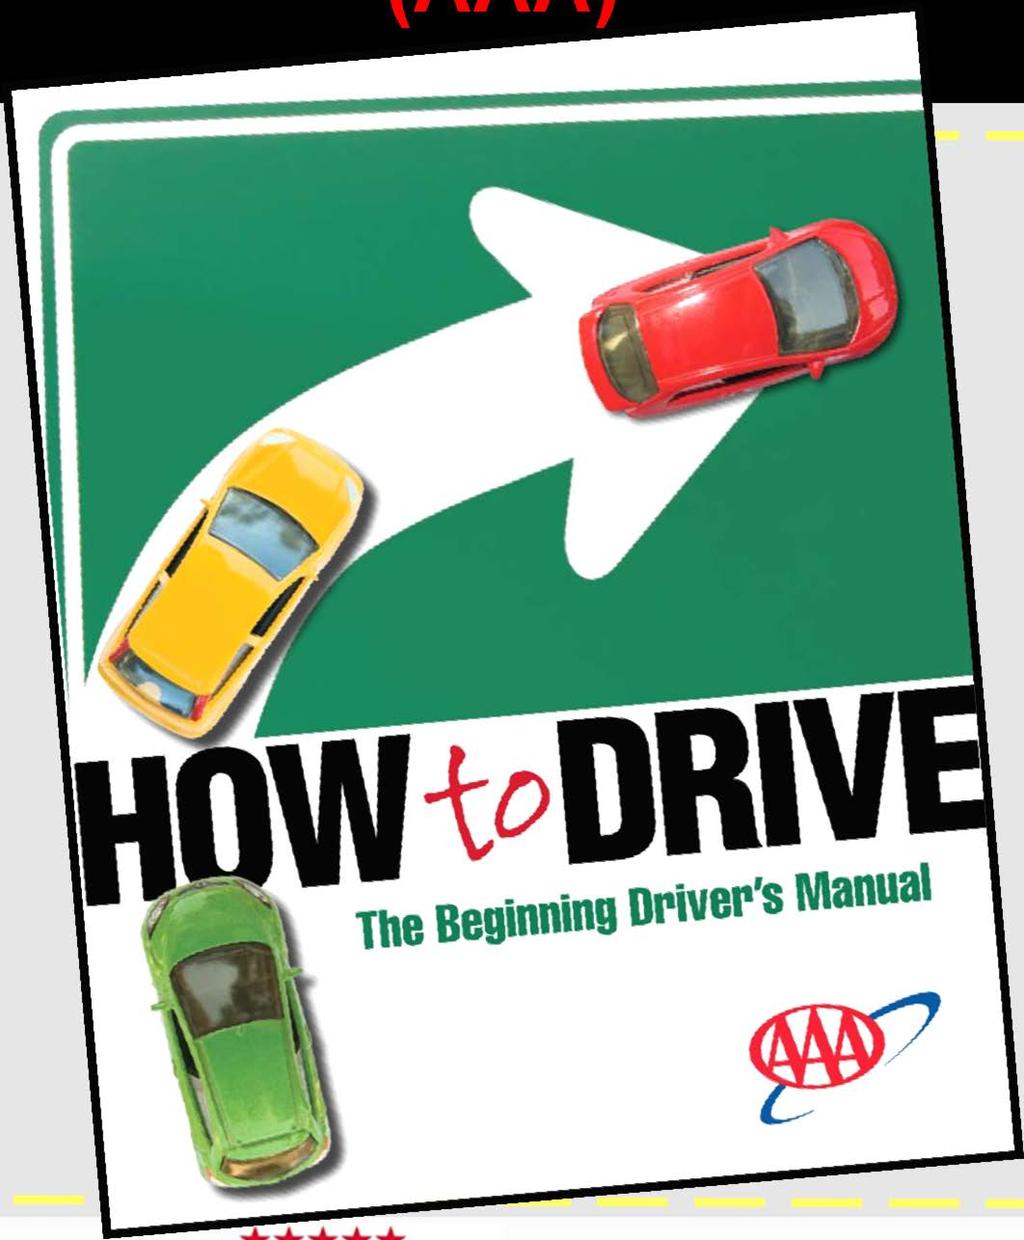 How to Drive (AAA)